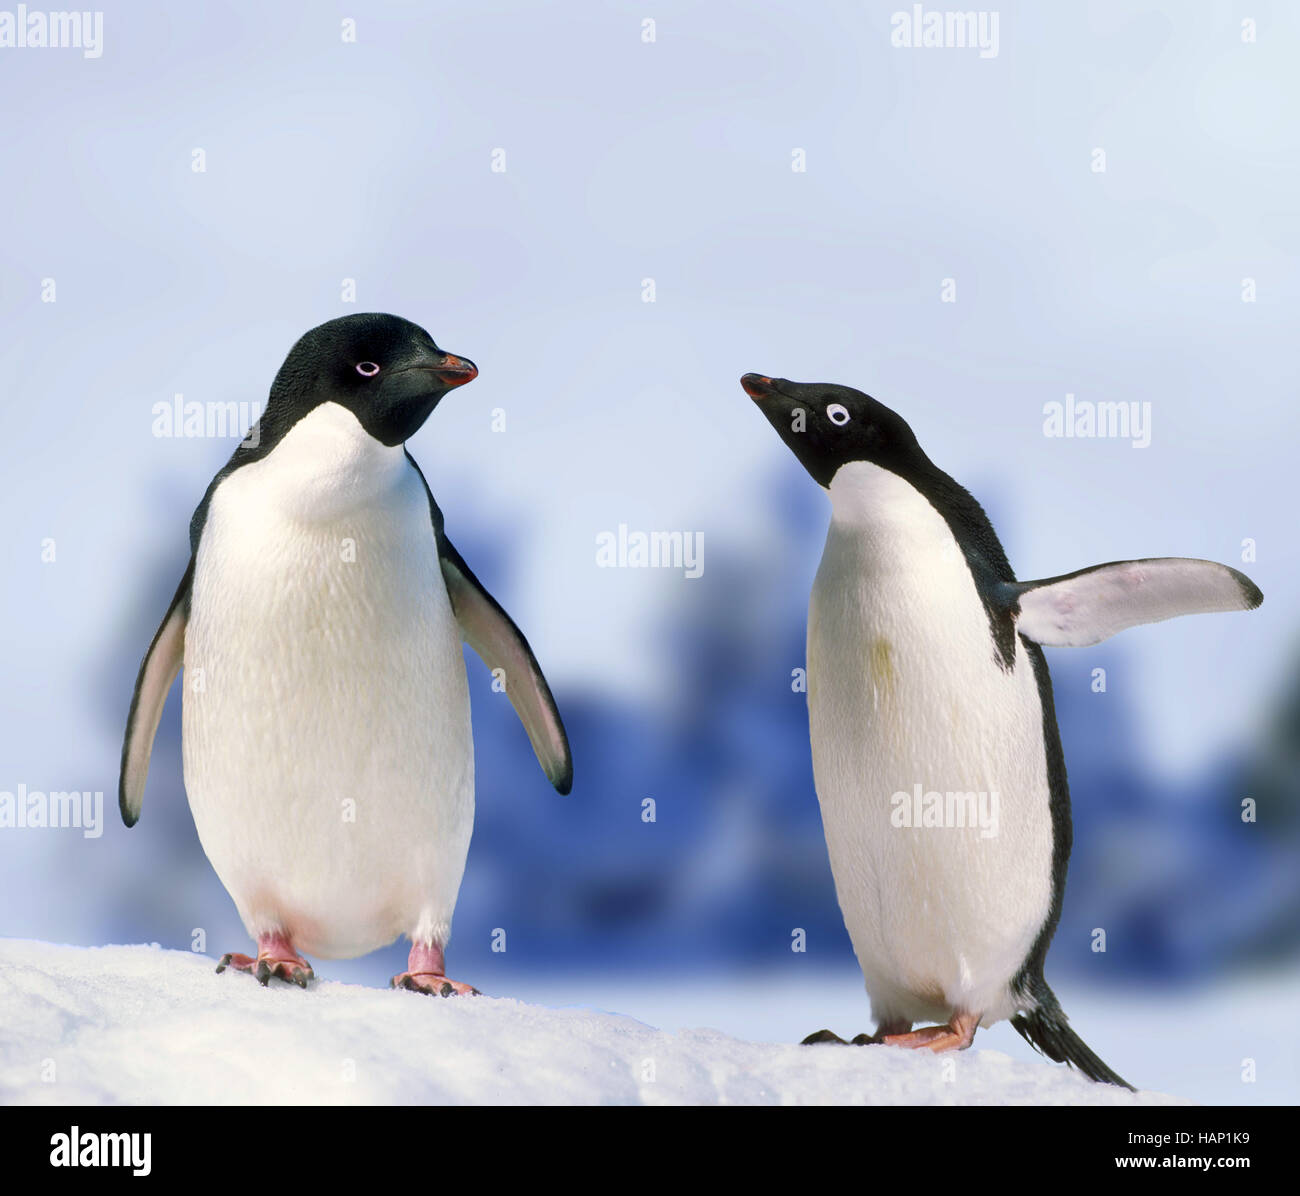 Pinguin, spheniscidae, penguin Banque D'Images